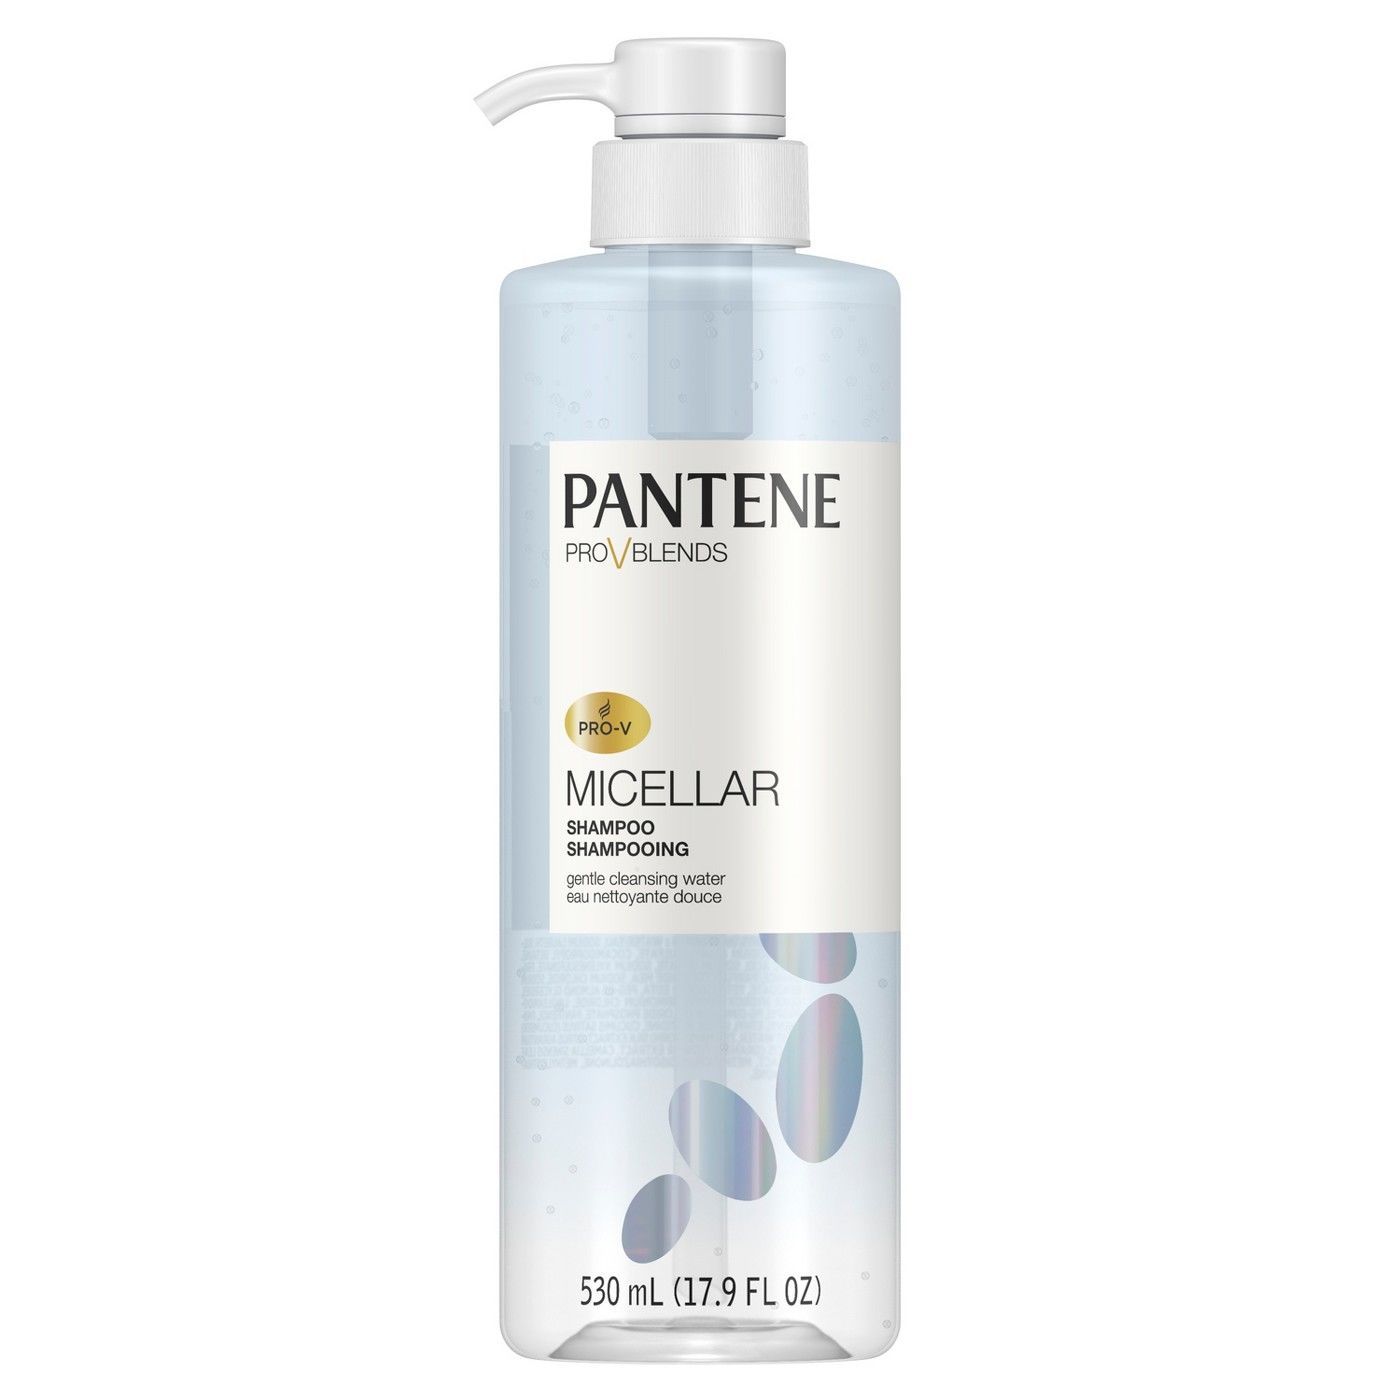 2. Pantene Pro-V Micellar Revitalize Shampoo